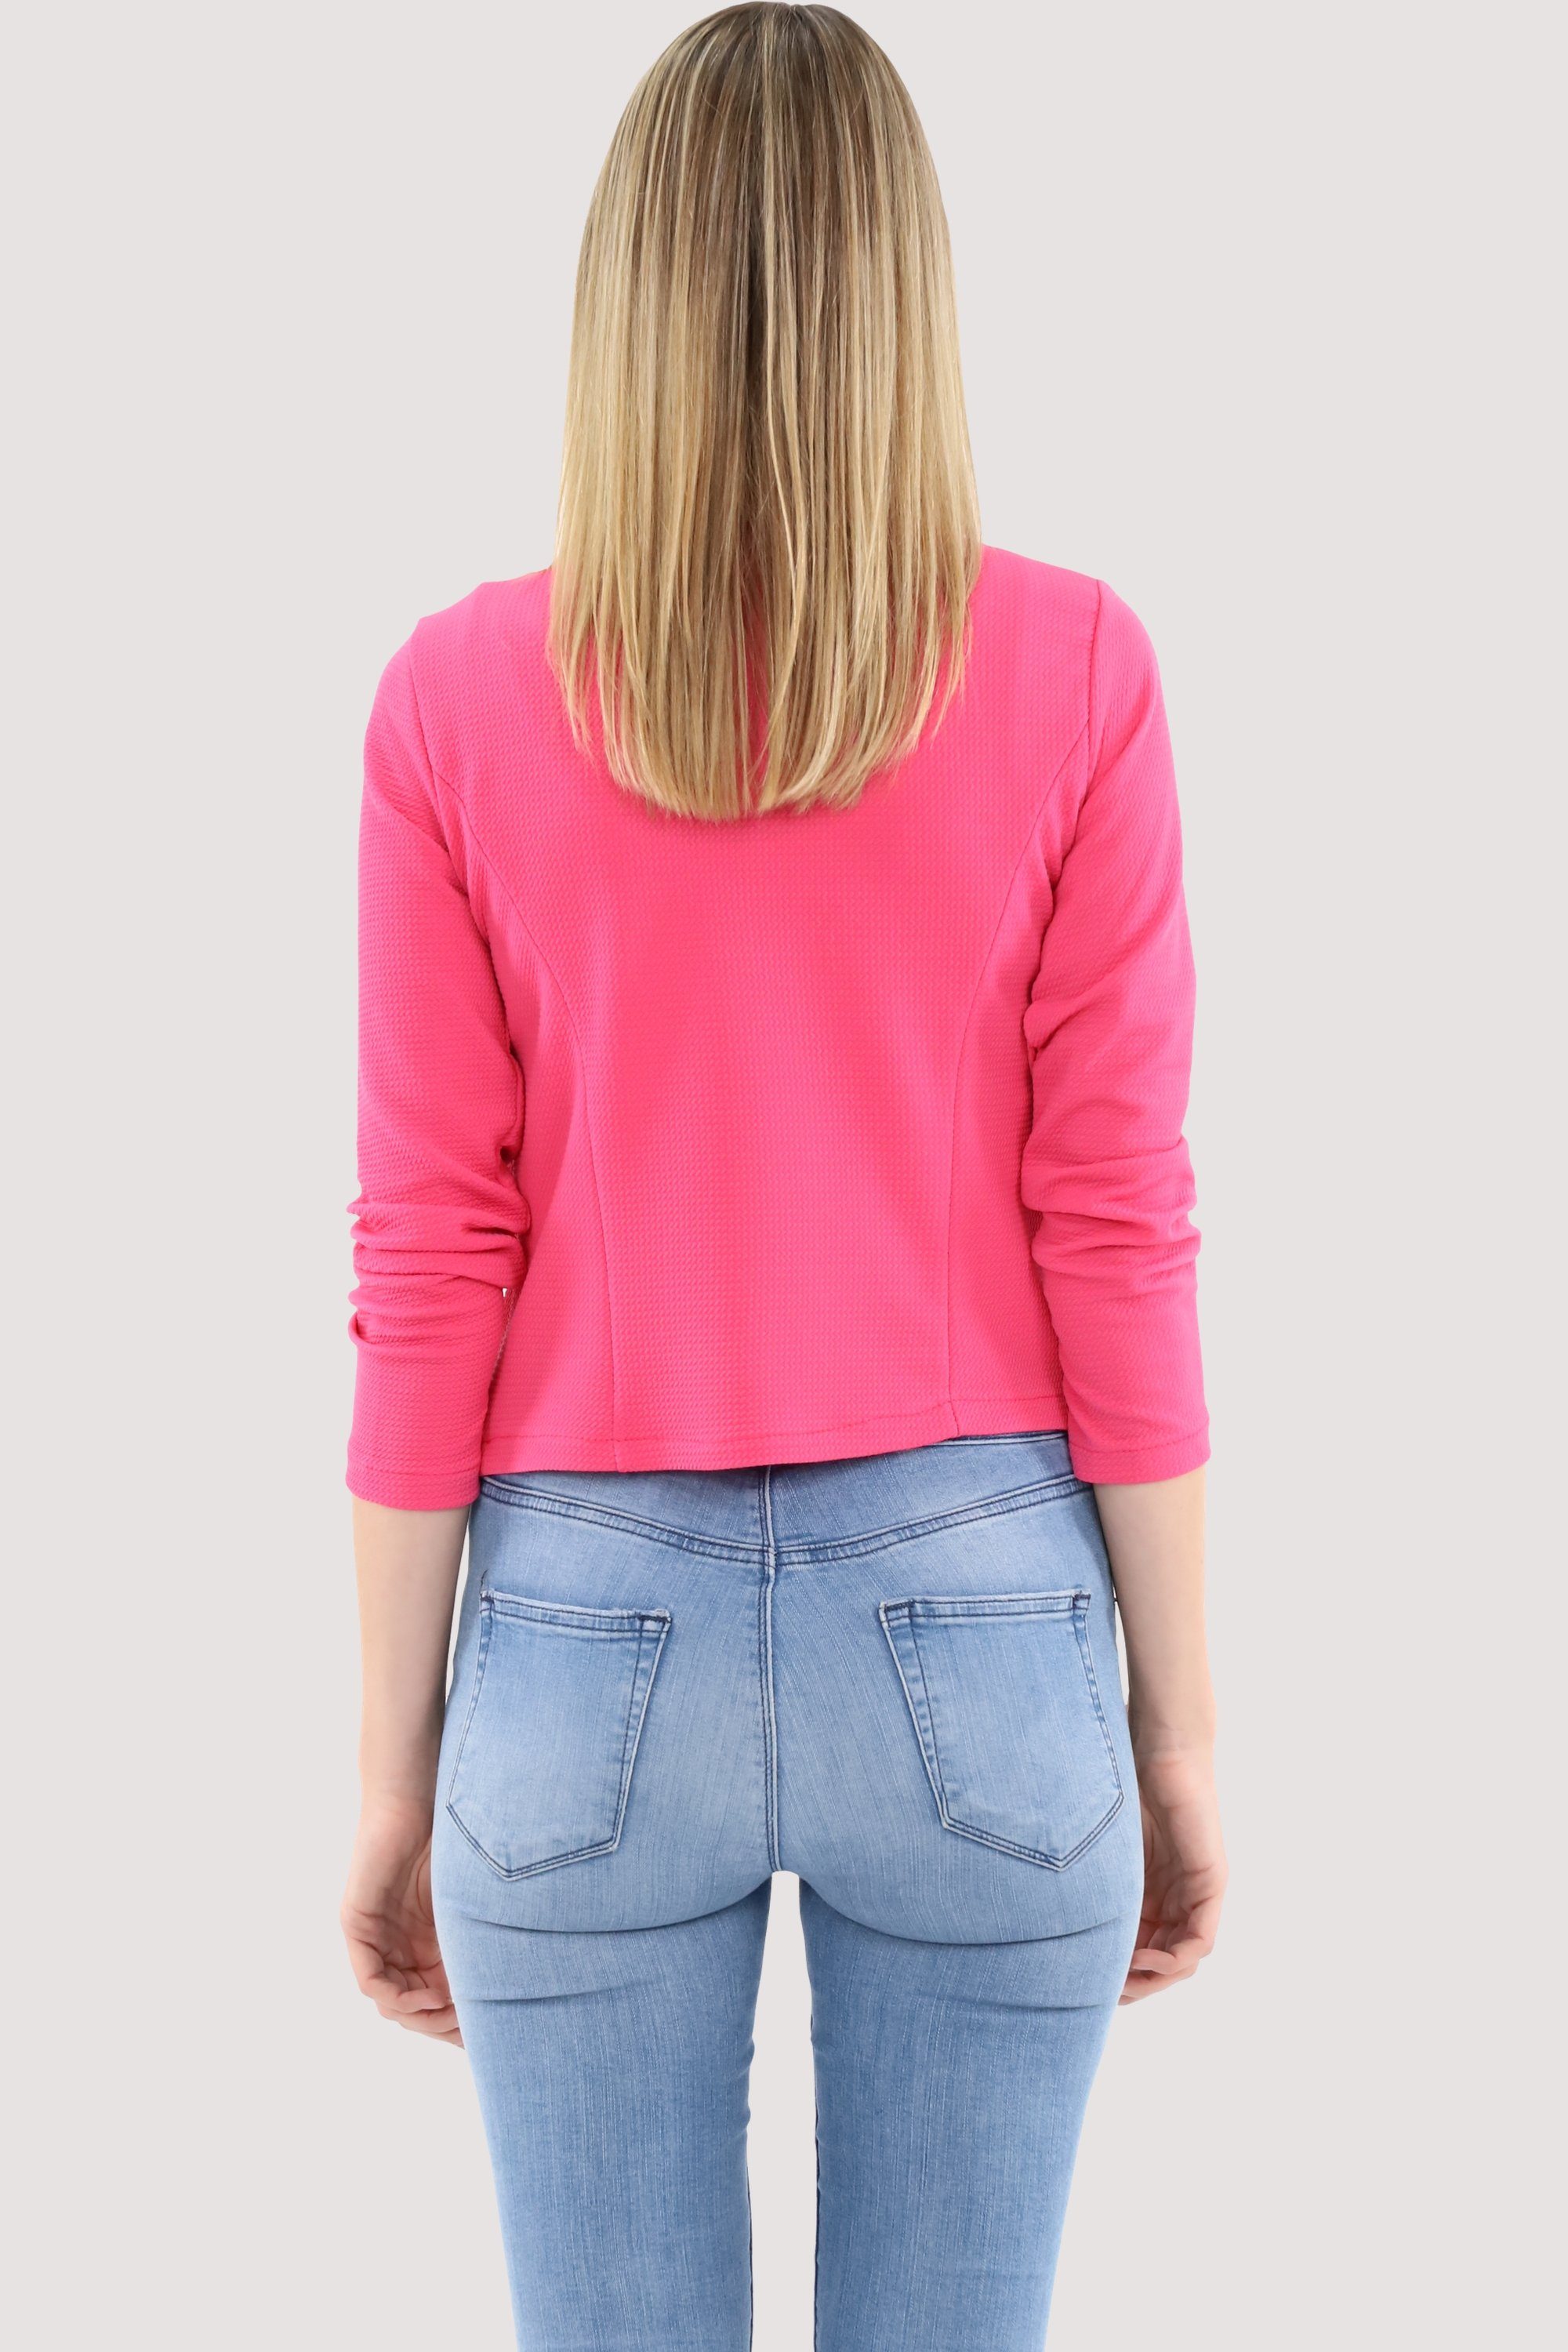 than malito im Jackenblazer fashion 6040 Basic-Look more pink Sweatblazer